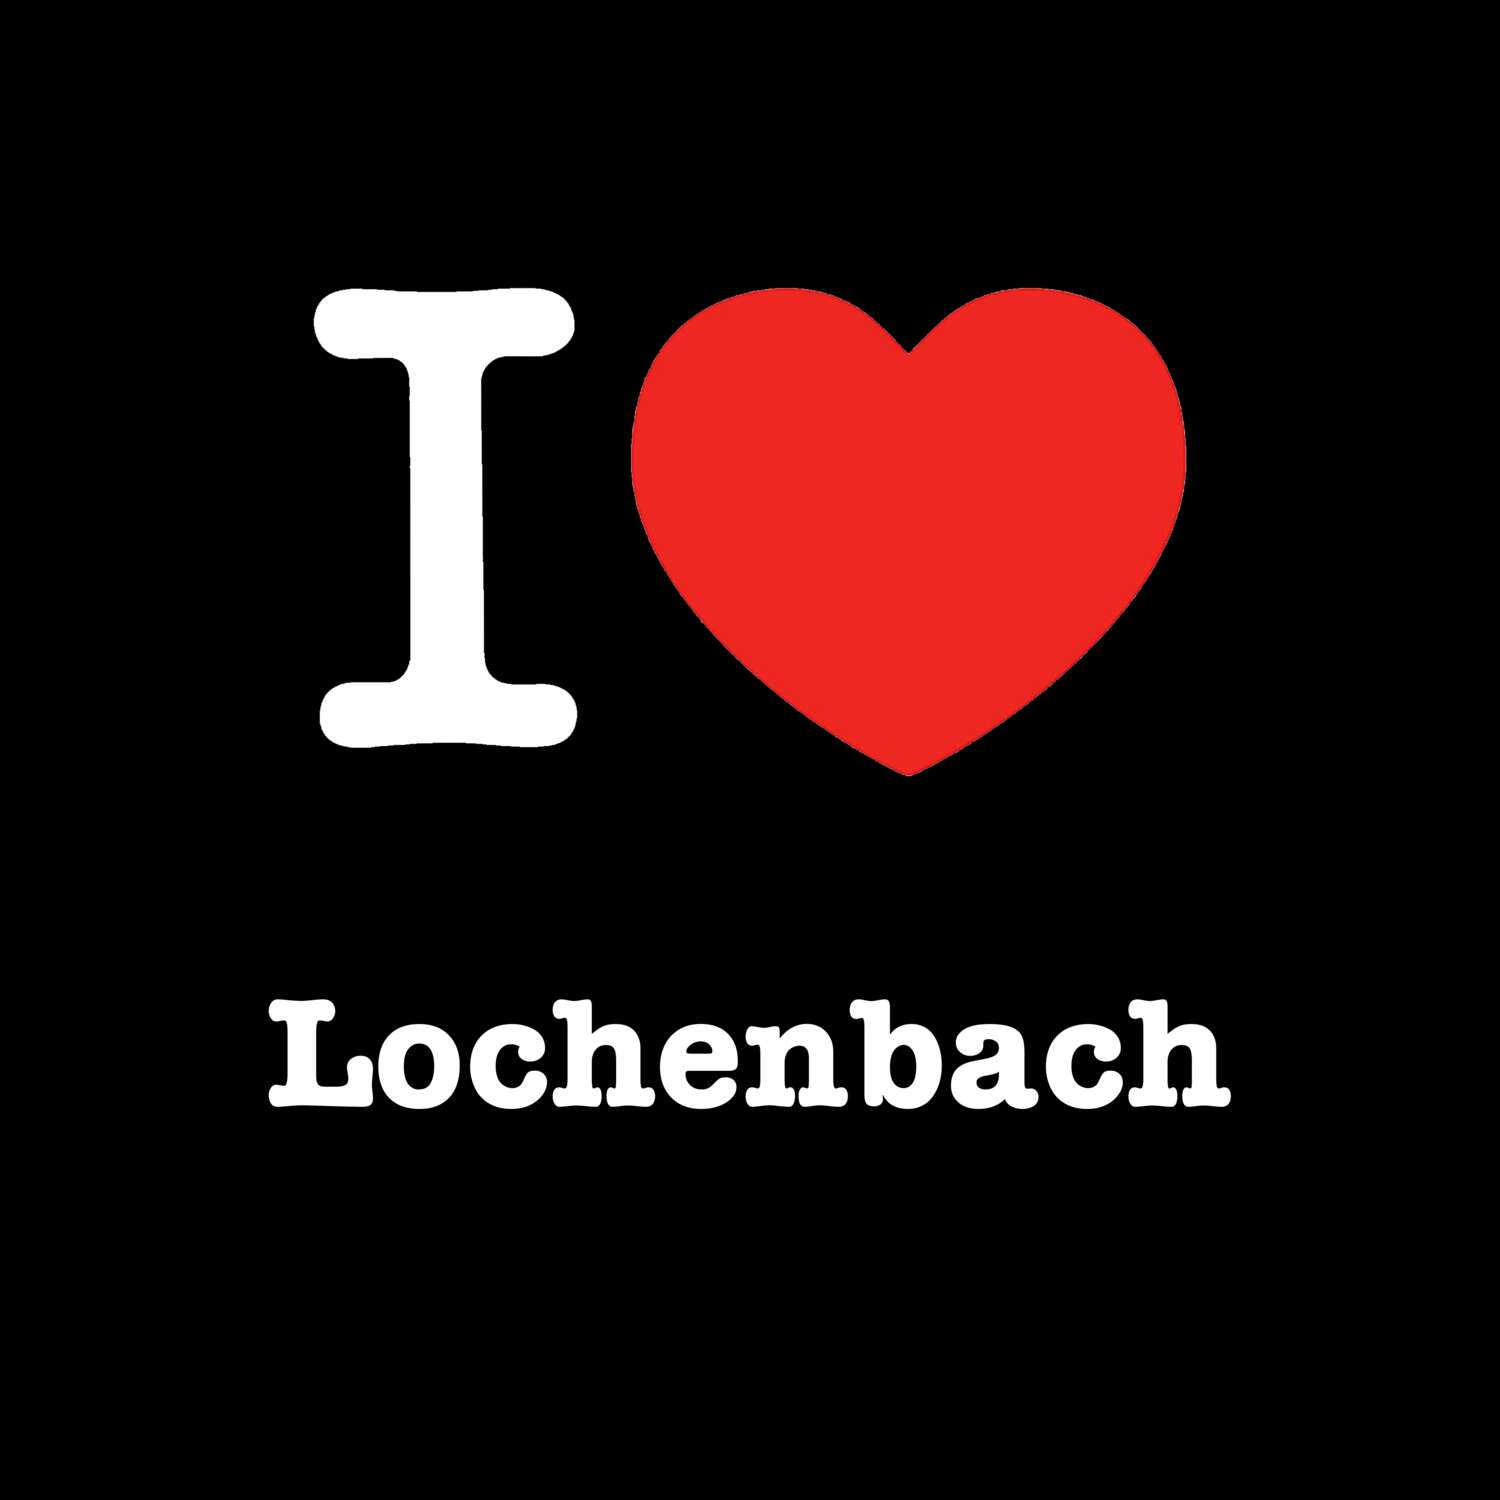 Lochenbach T-Shirt »I love«